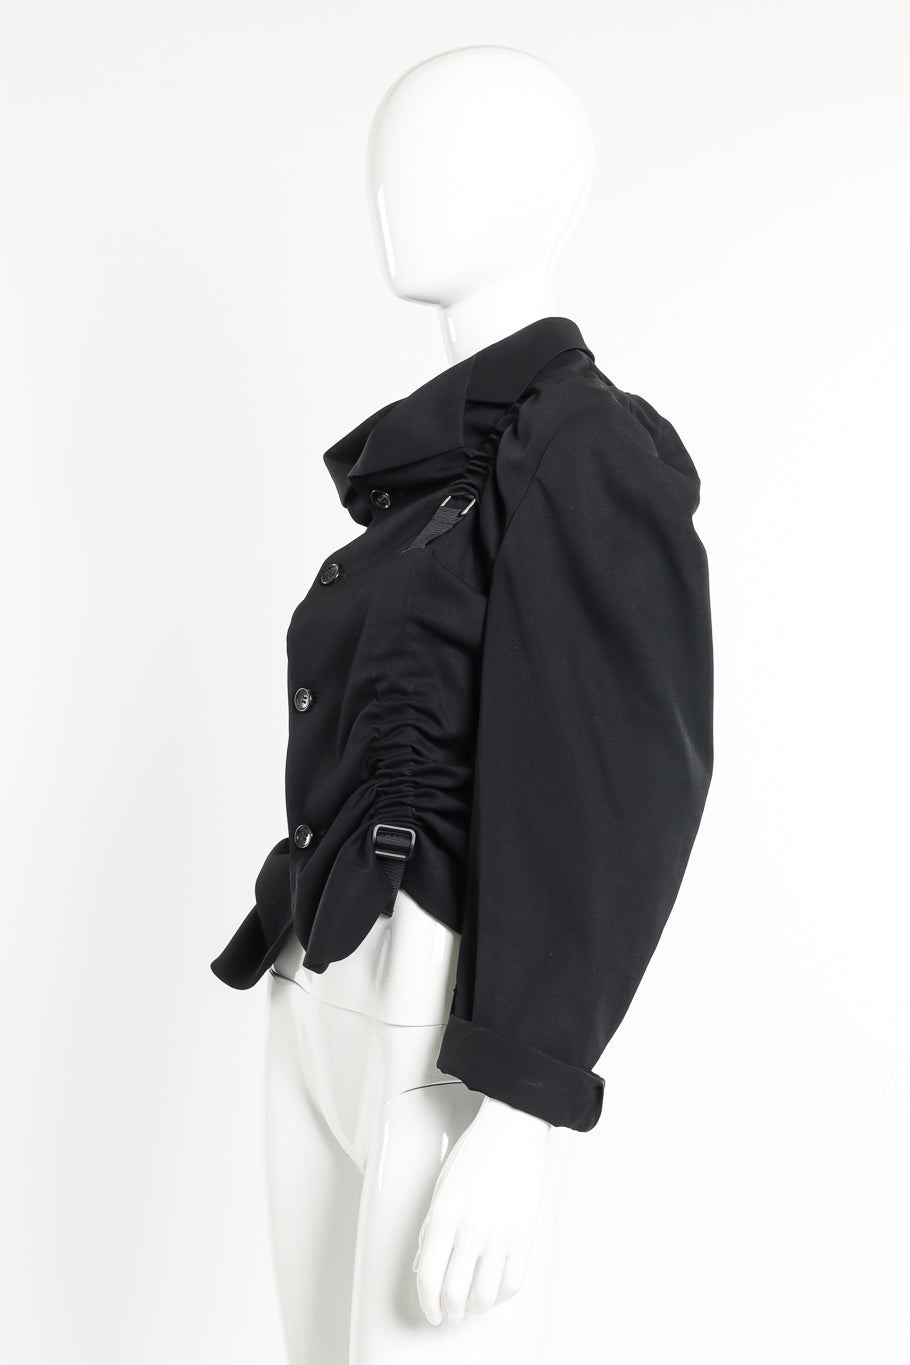 Junya Watanabe 2003 S/S Parachute Harness Jacket side on mannequin @recessla